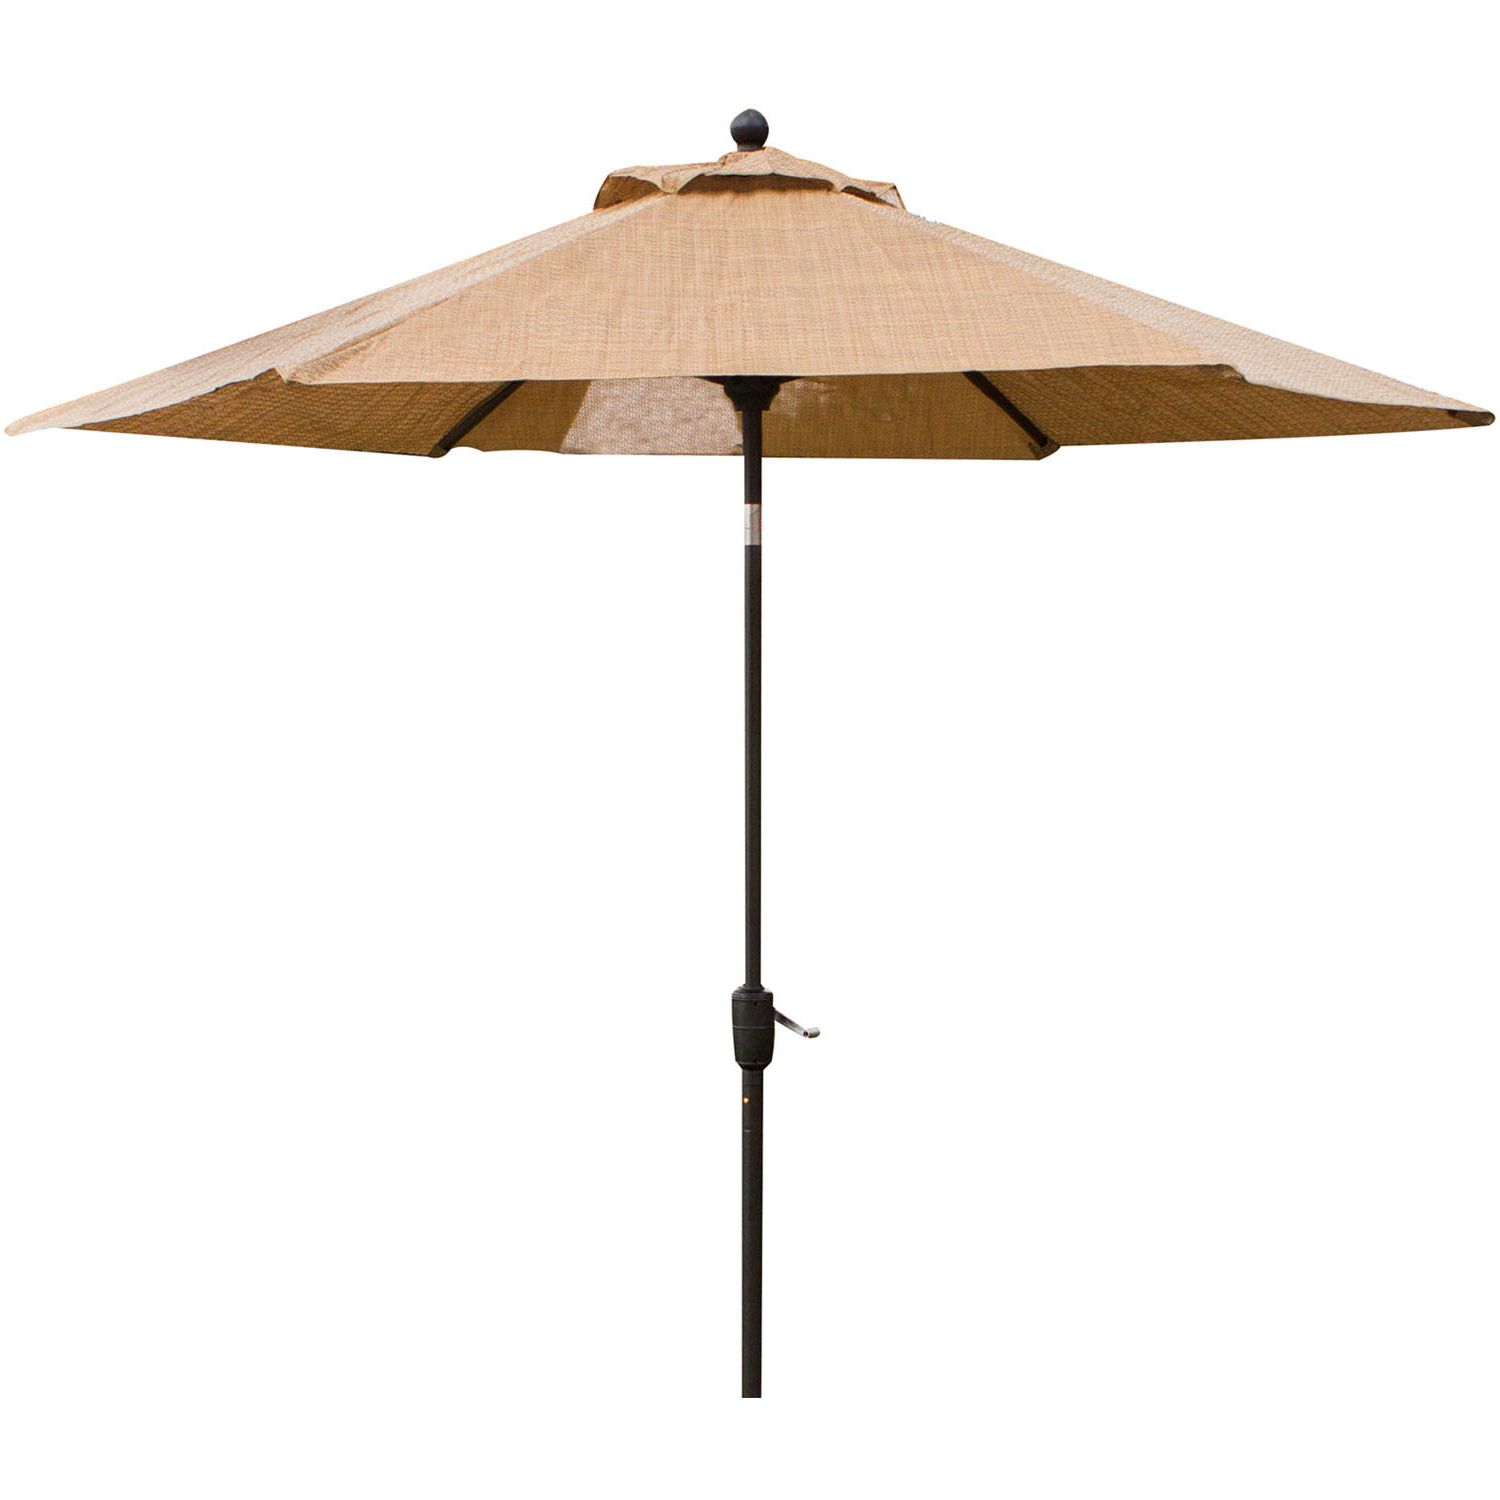 Mraz Market Umbrellas Pertaining To Famous Stiefel 9' Market Umbrella (View 15 of 20)